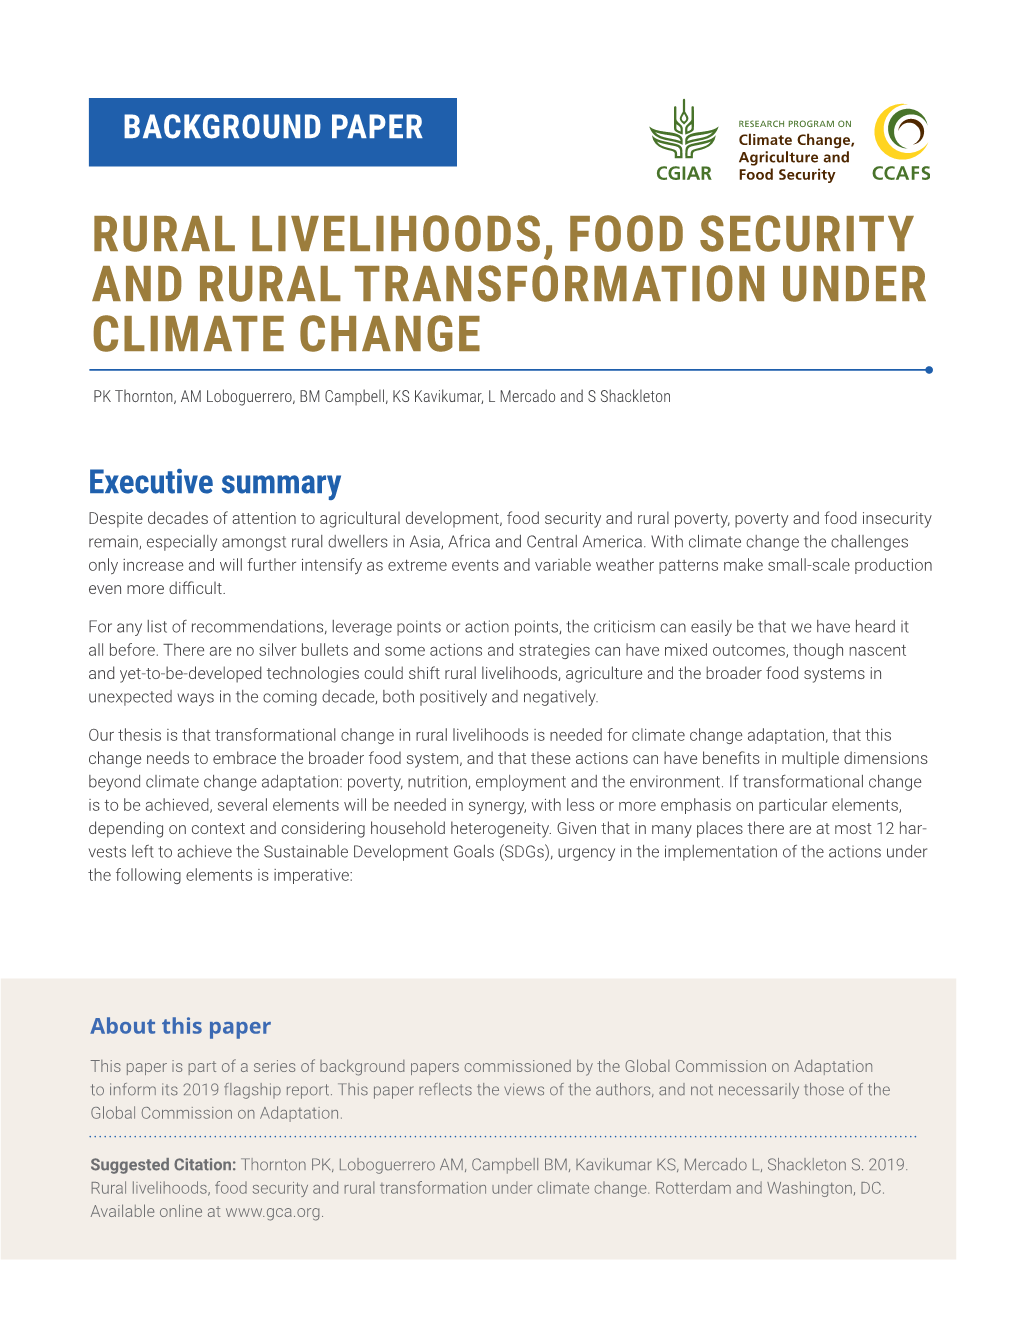 Rural Livelihoods, Food Security and Rural Transformation Under Climate Change